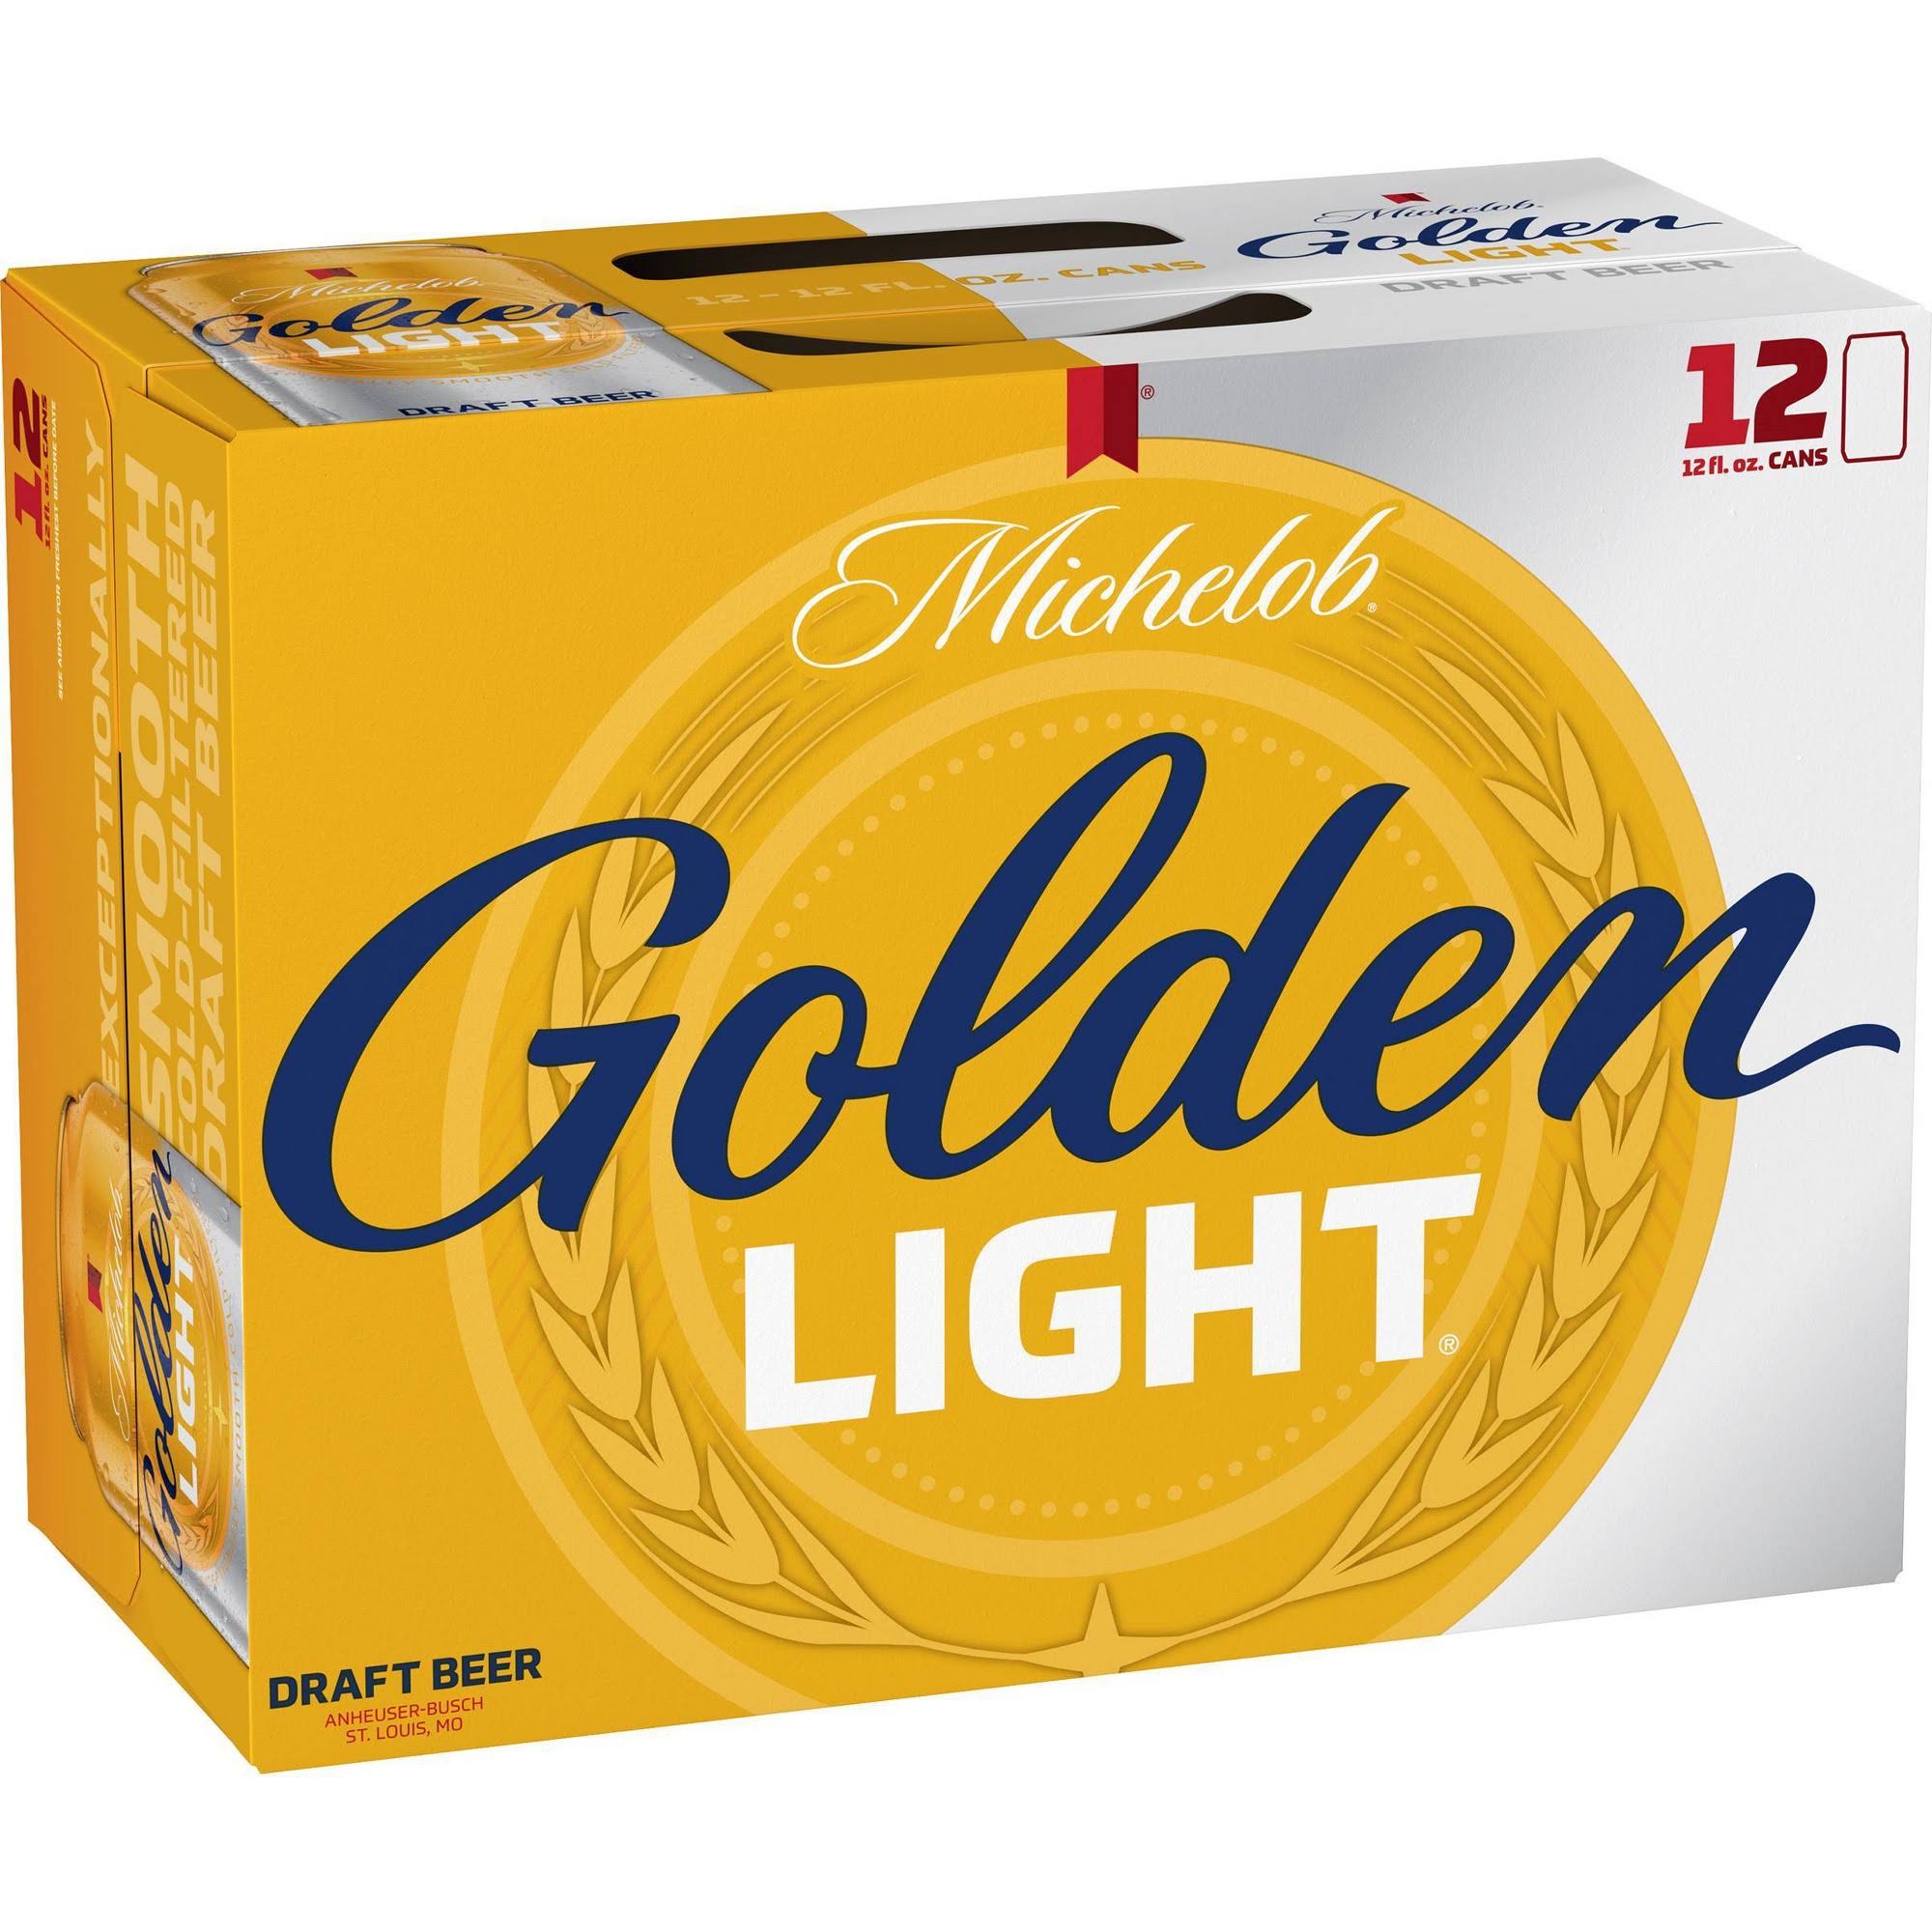 Michelob Golden Light Draft Beer - 12pk, 12oz